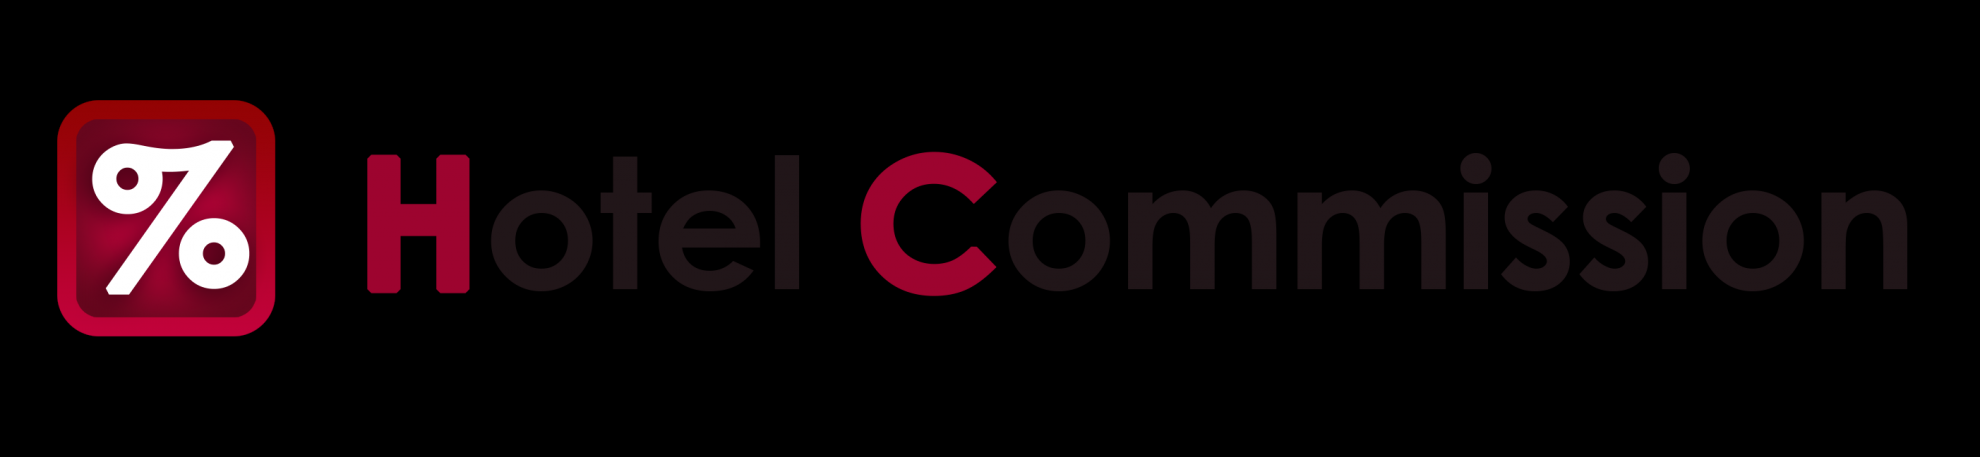 hotelcommission Logo